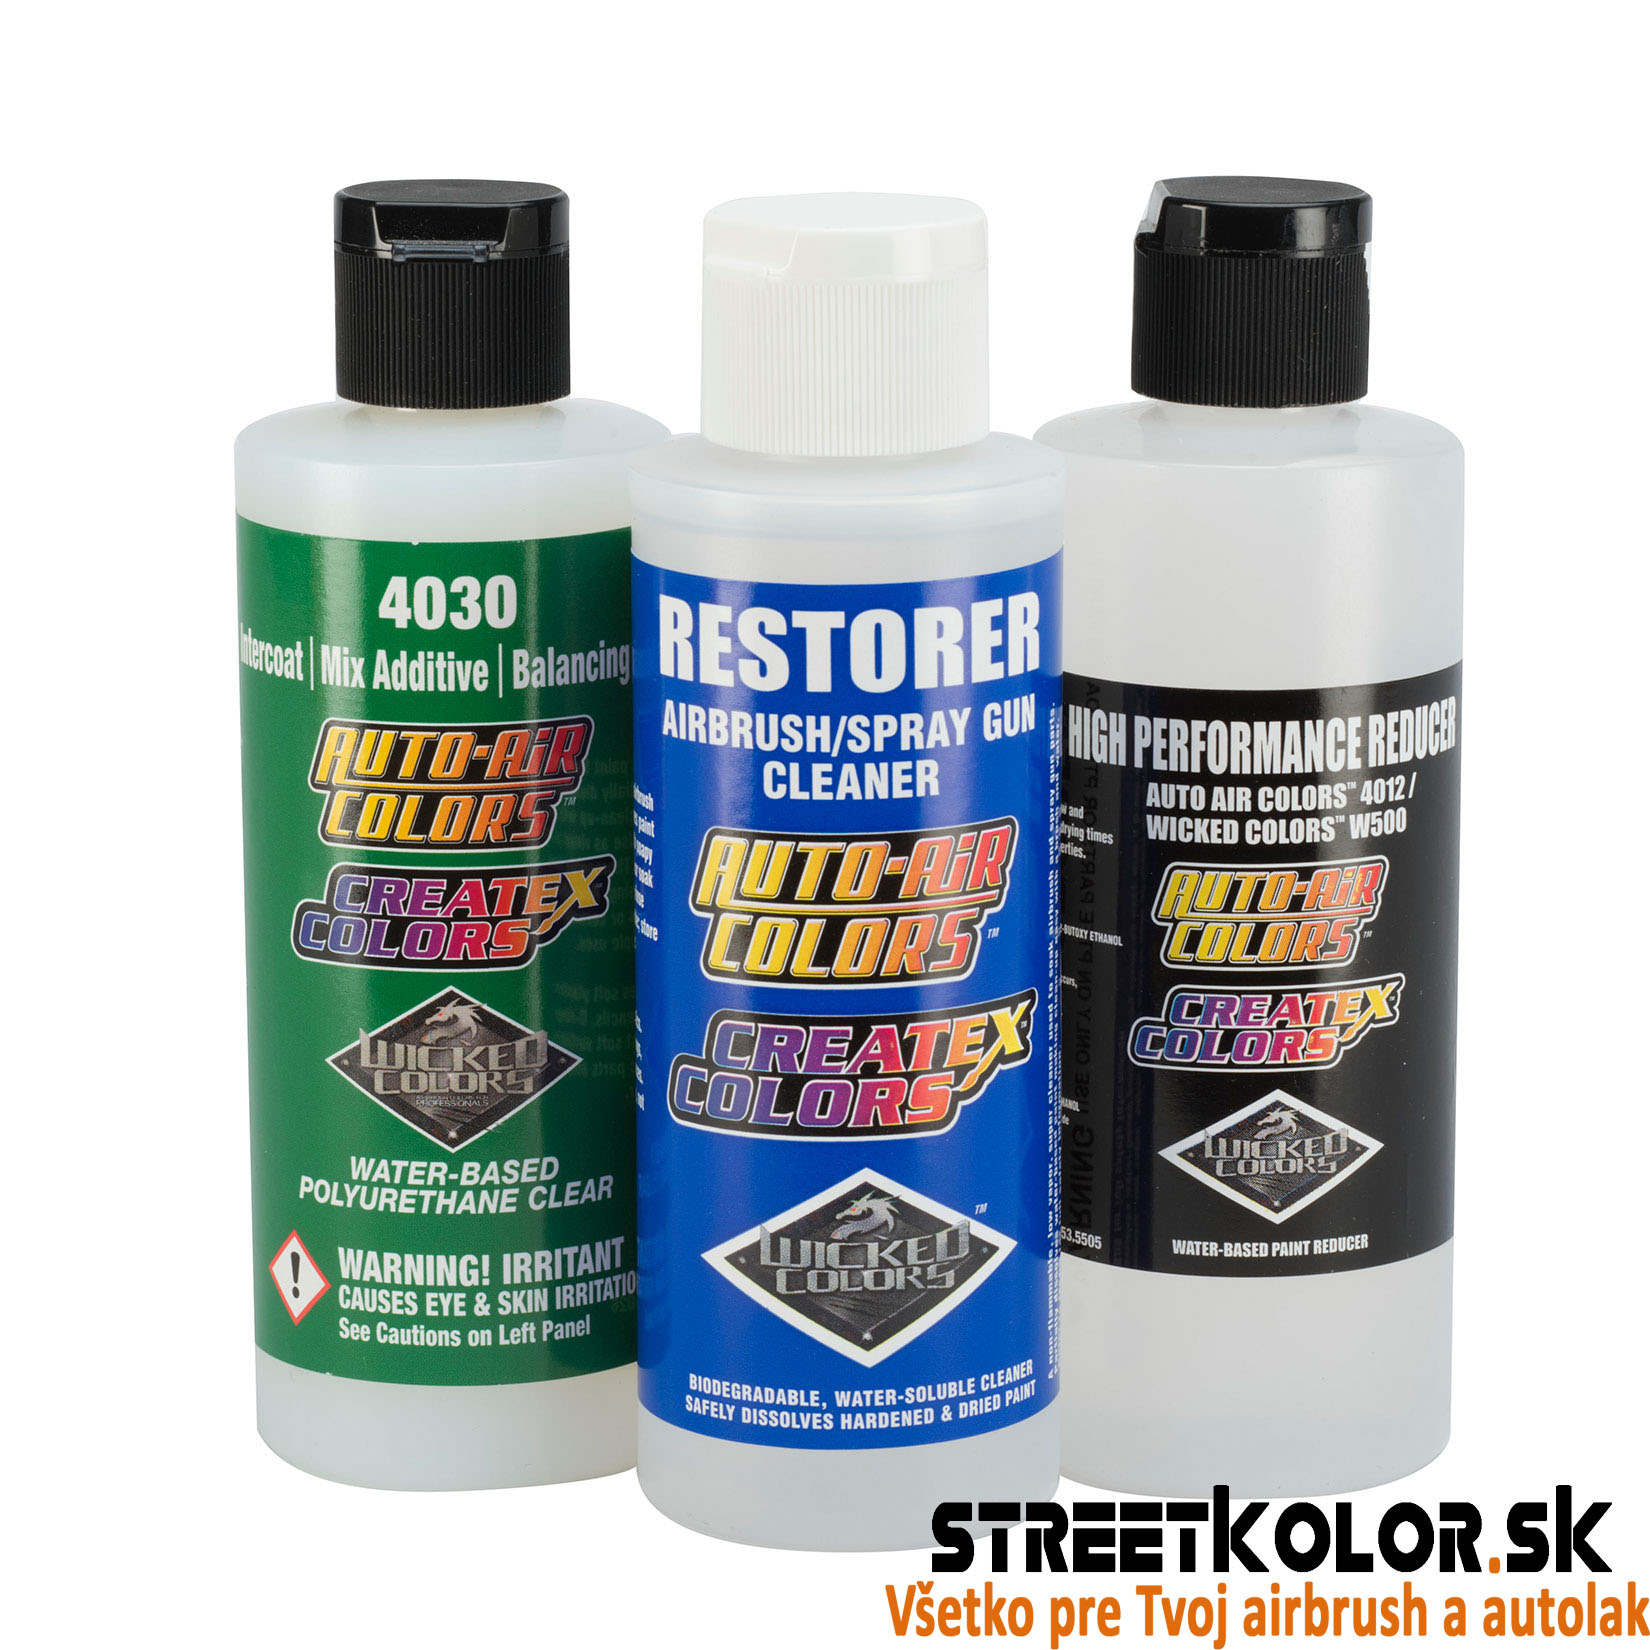 CreateX/Wicked/Auto Air Három airbrush adalakanyag készlete 120 ml 